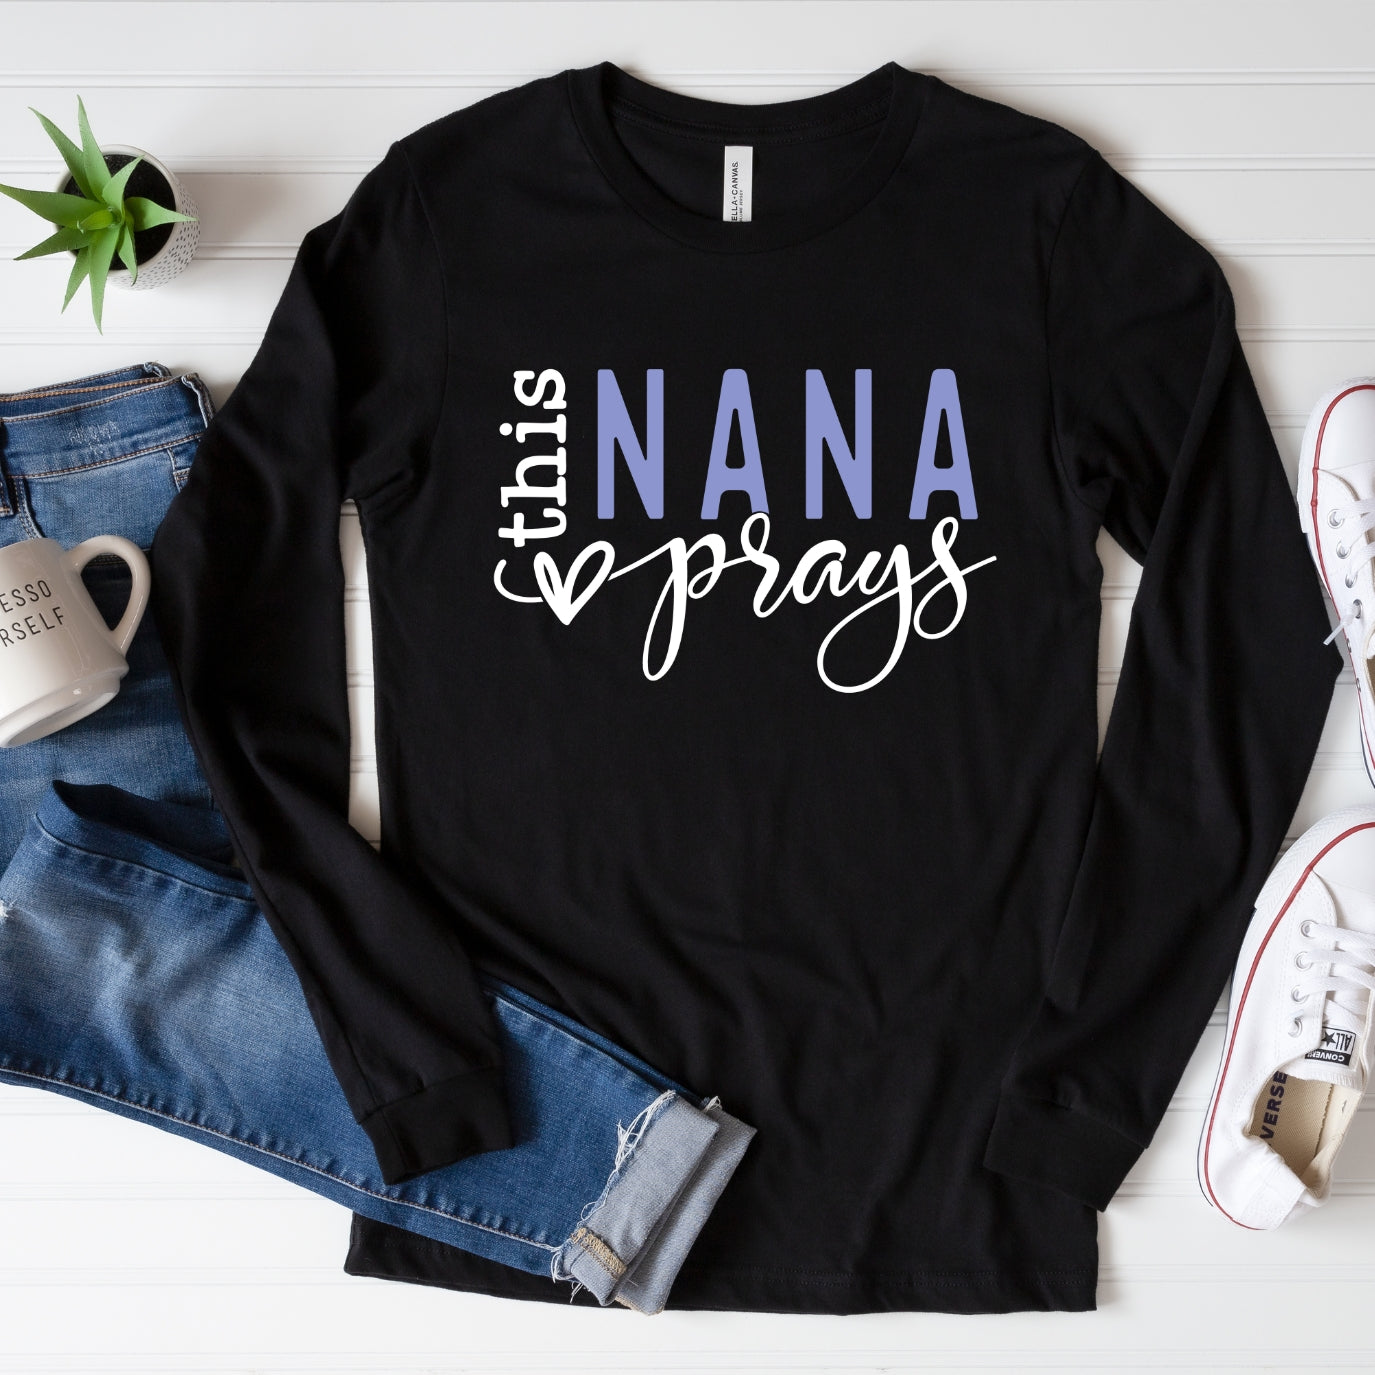 This Nana Prays Long Sleeve Shirt